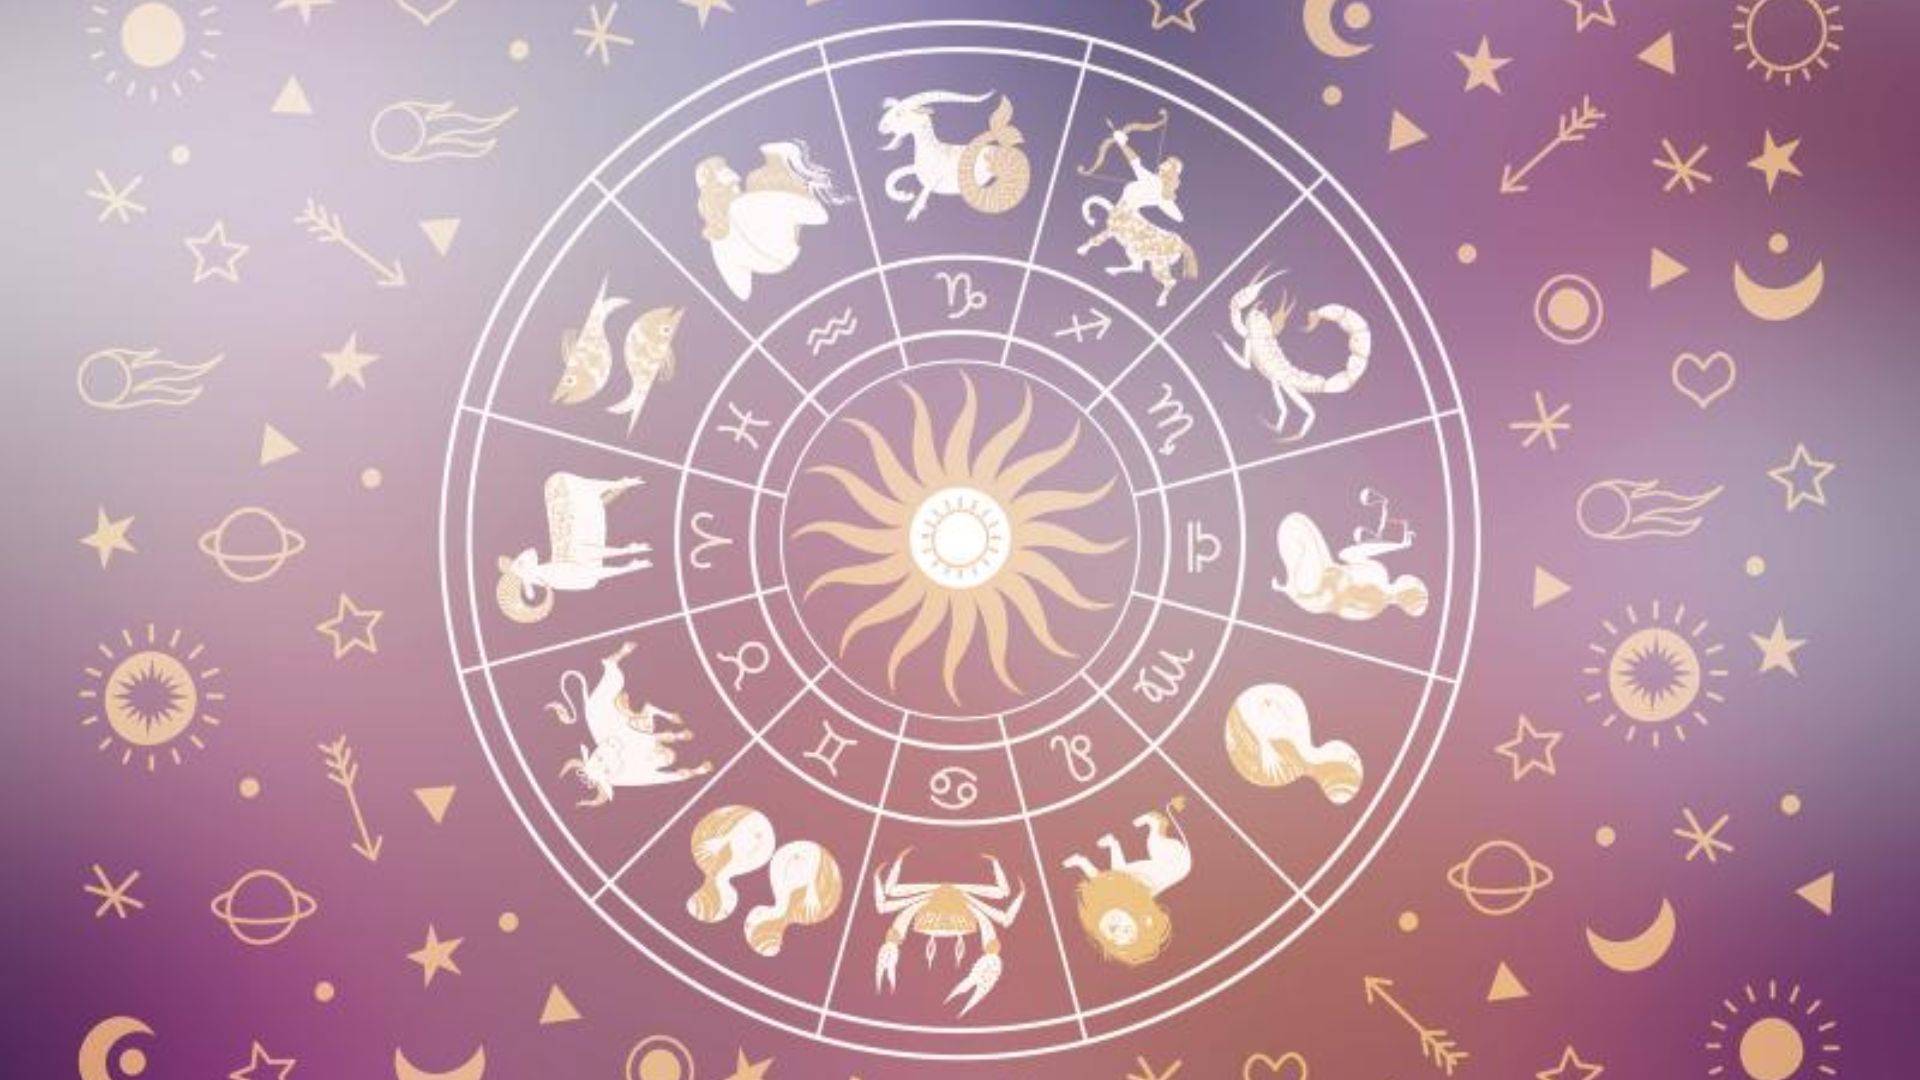 Zodiac Signs In Order